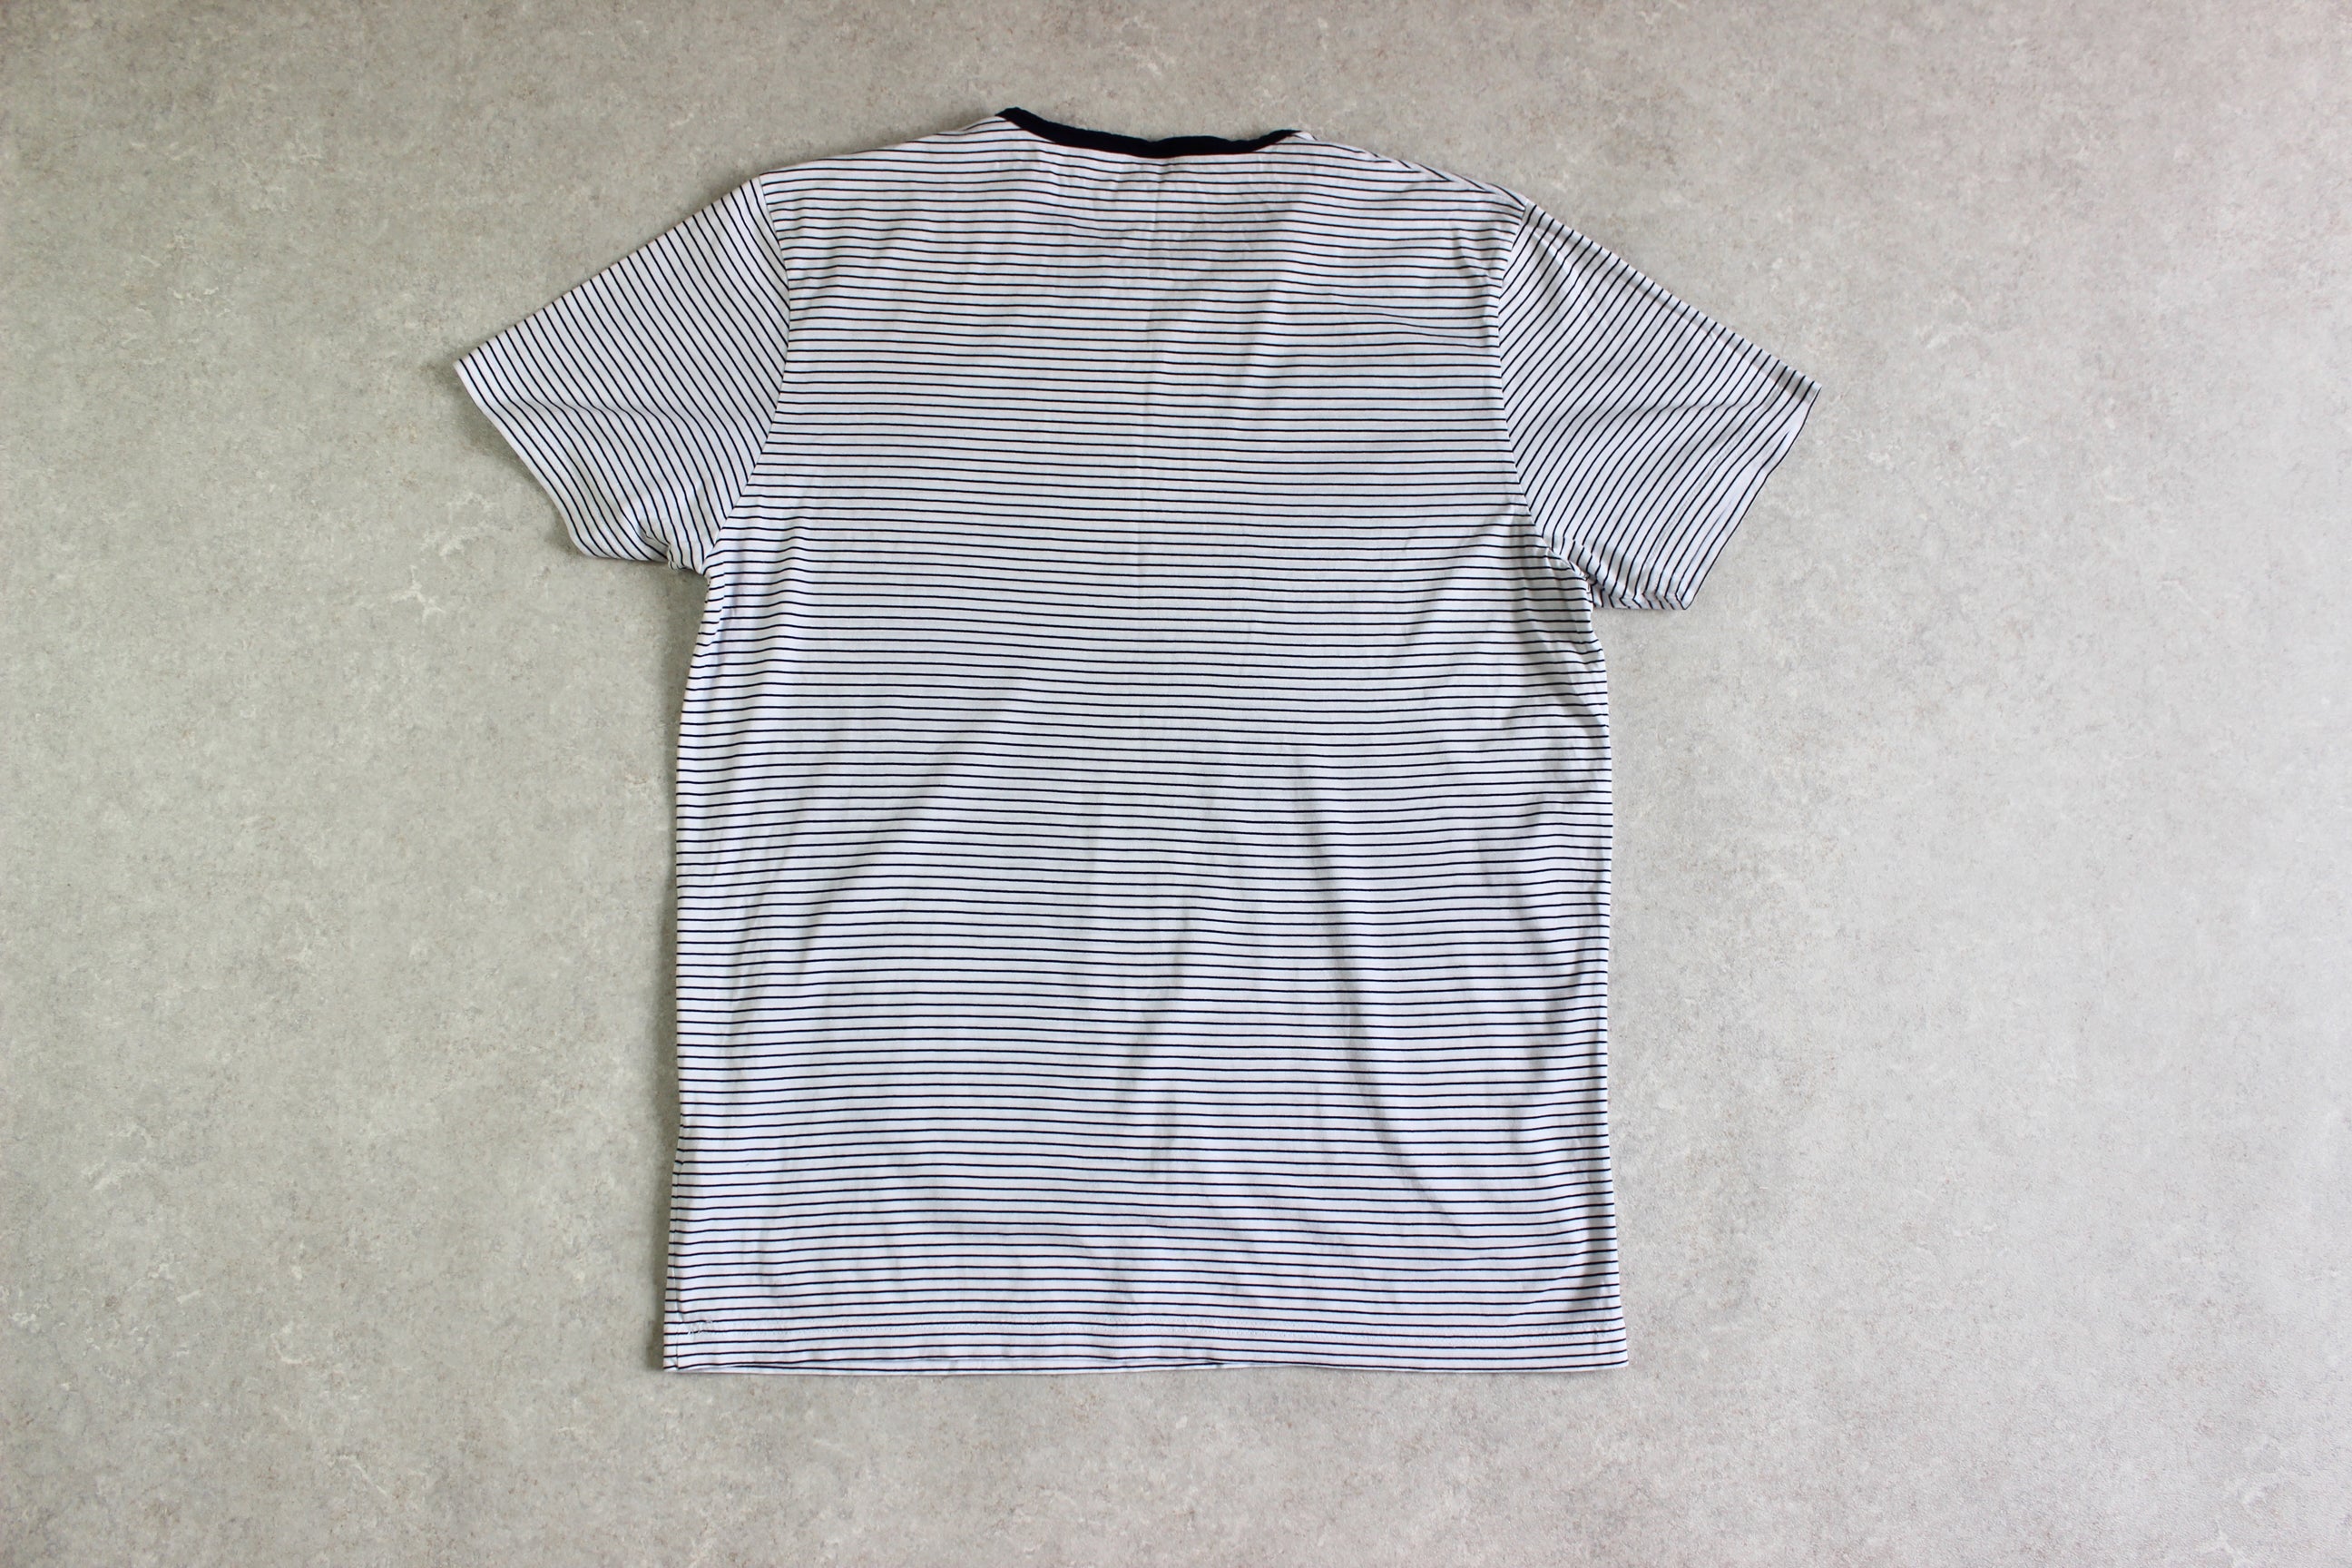 Sunspel - T Shirt - White/Navy Blue Stripe - Medium